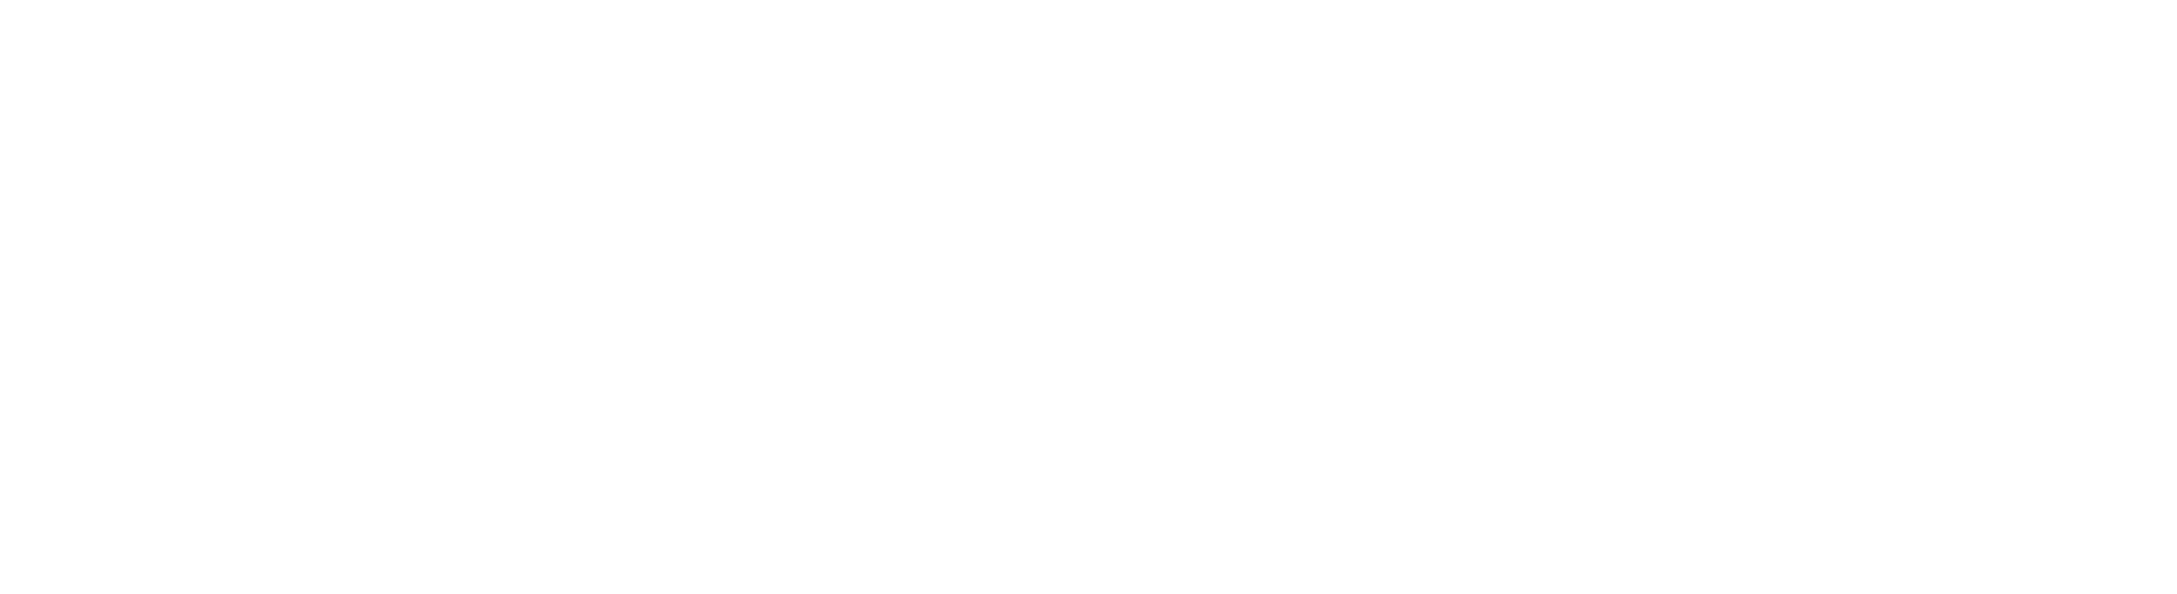 Maptun Powersports